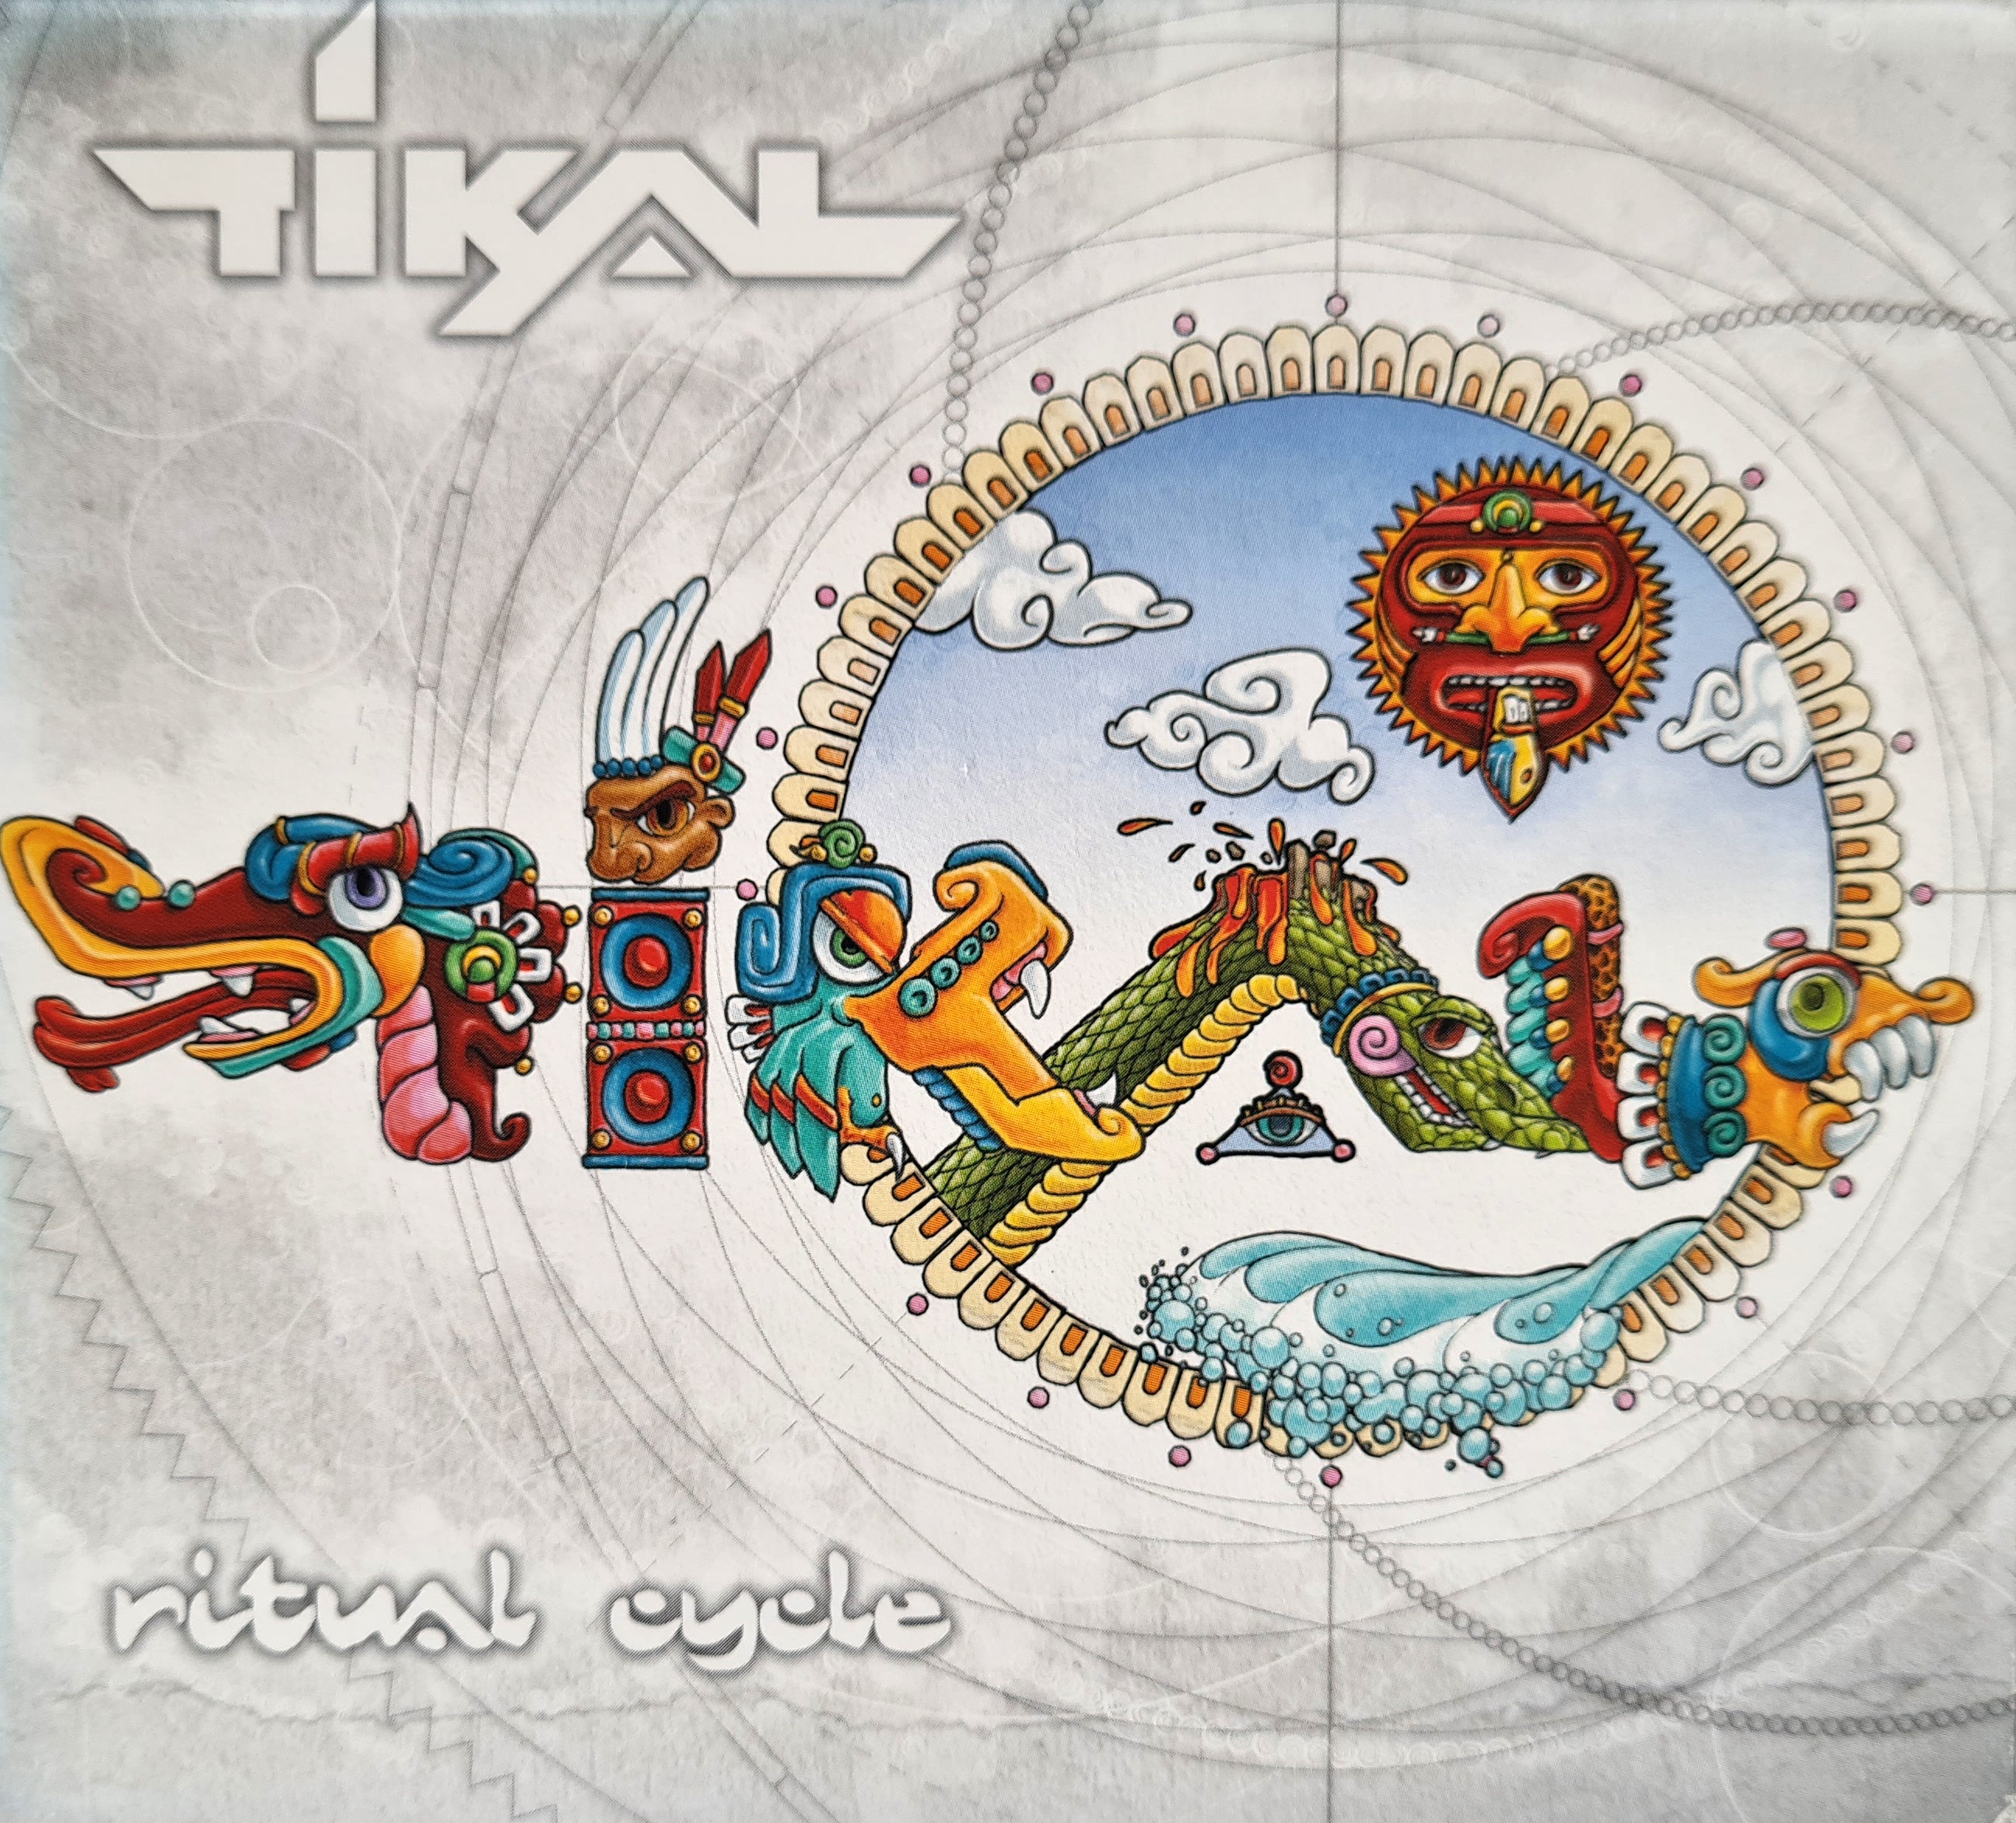 Tikal - Ritual Cycle (CD) Psy-Trance, Downtempo